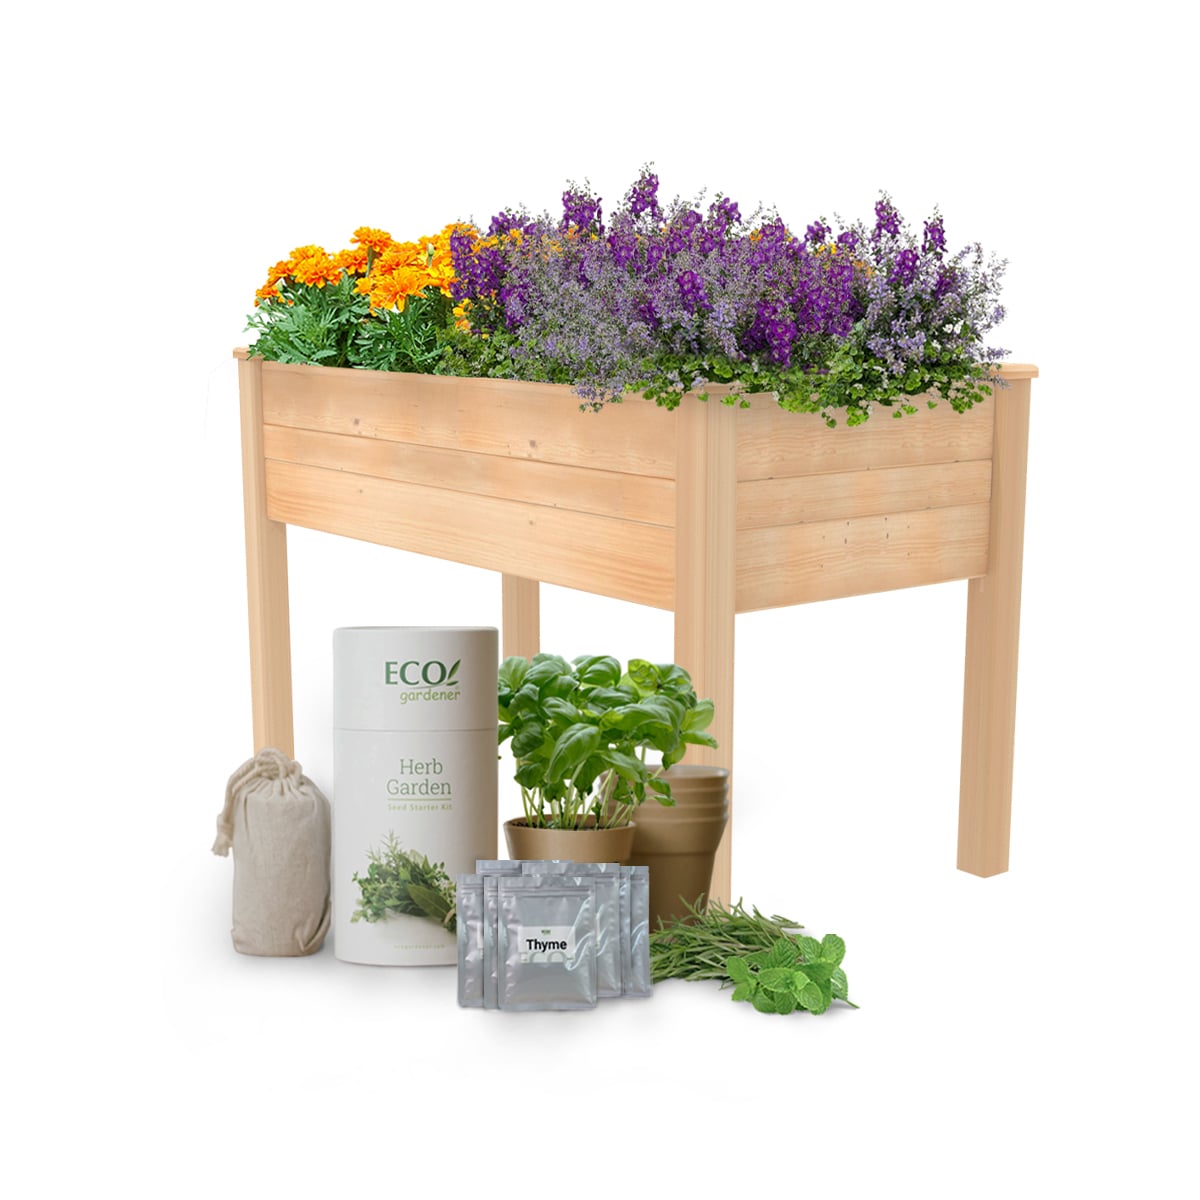 ECOgardener 2’x4’ Raised Bed Planter Bundle with Herb Garden Kit Starter Pack